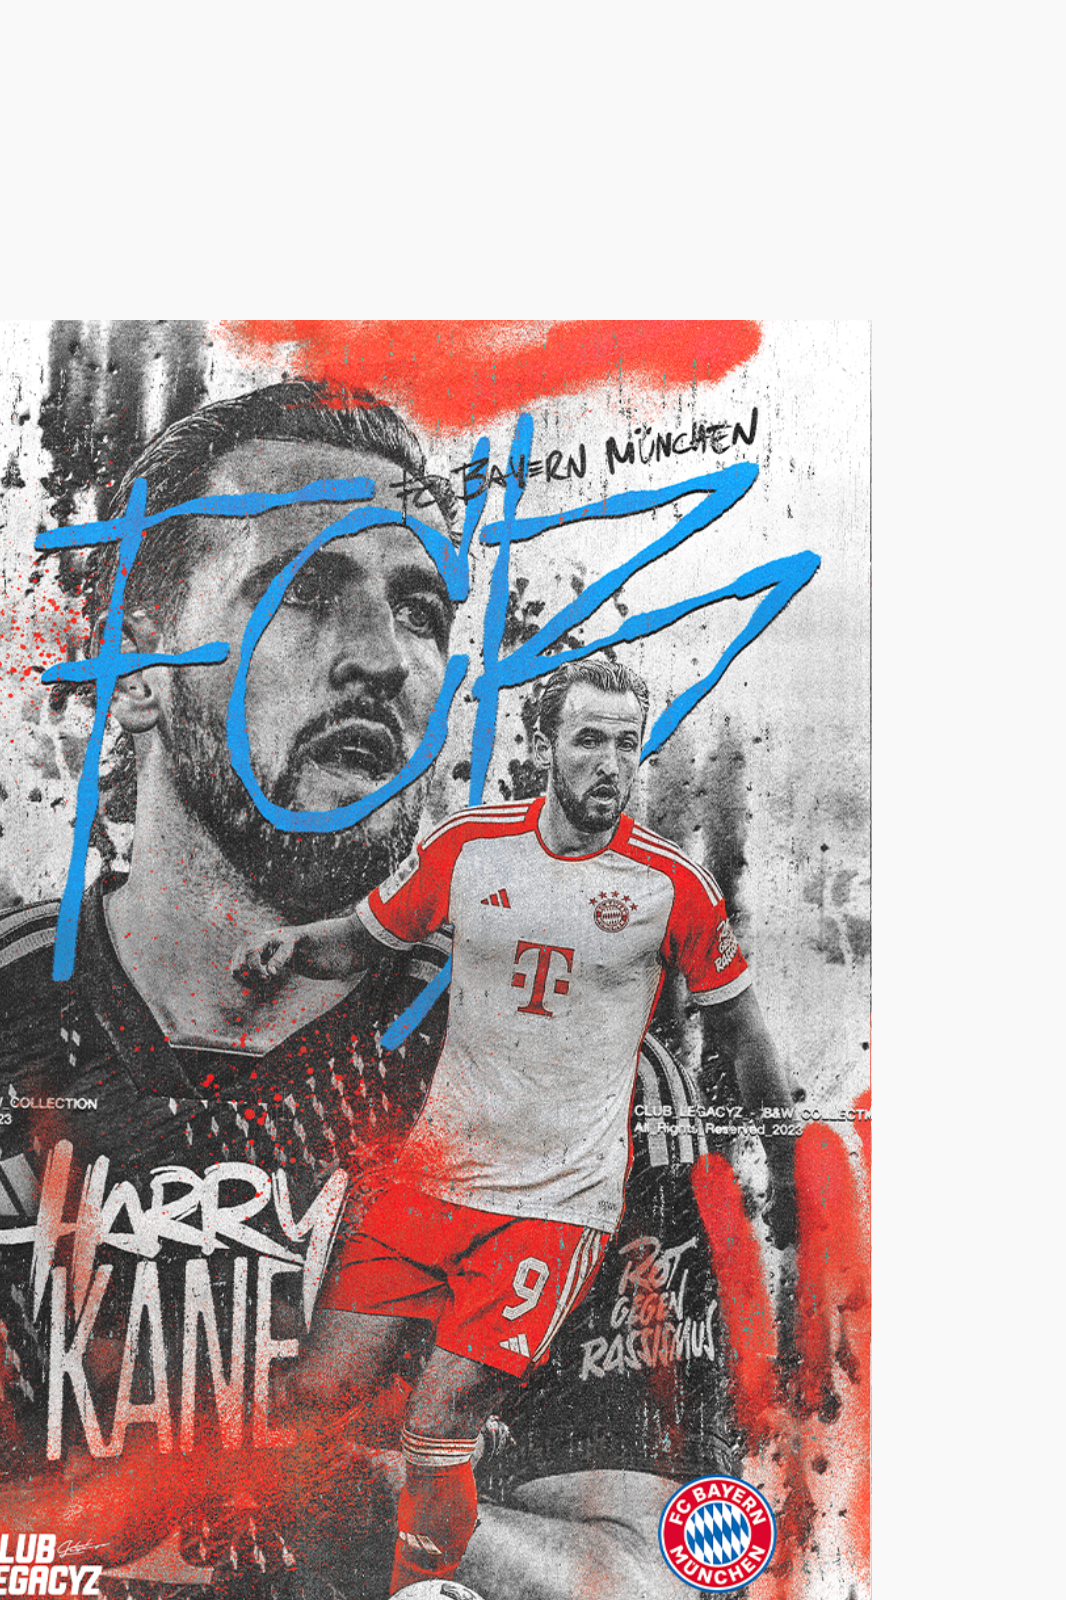 FC Bayern München - Harry Kane Black & White Poster limited to 100